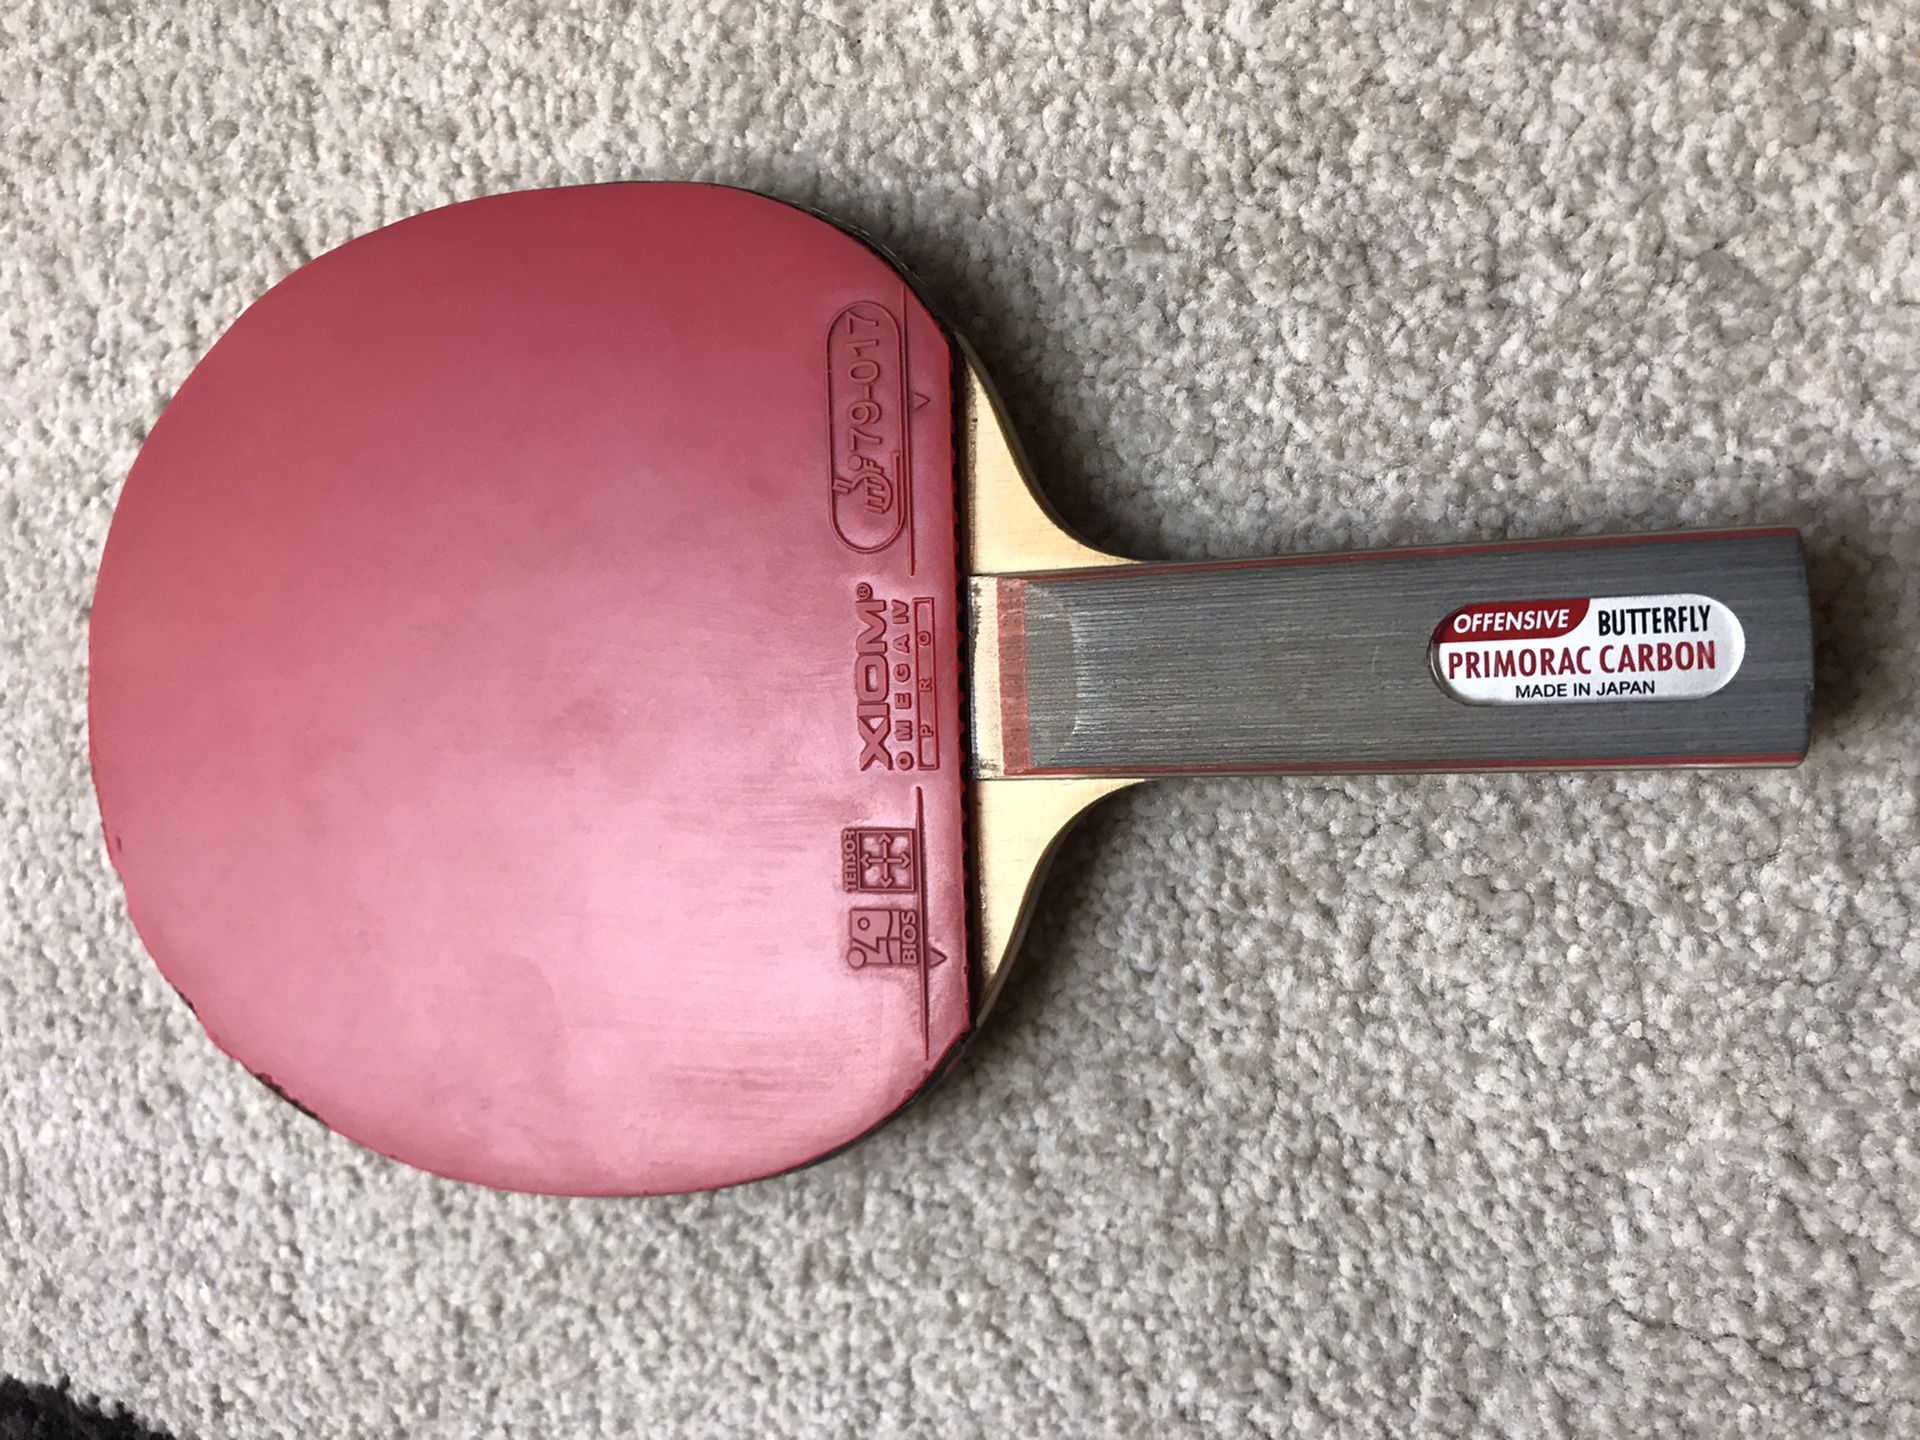 Butterfly Primorac Carbon, pro table tennis racket.